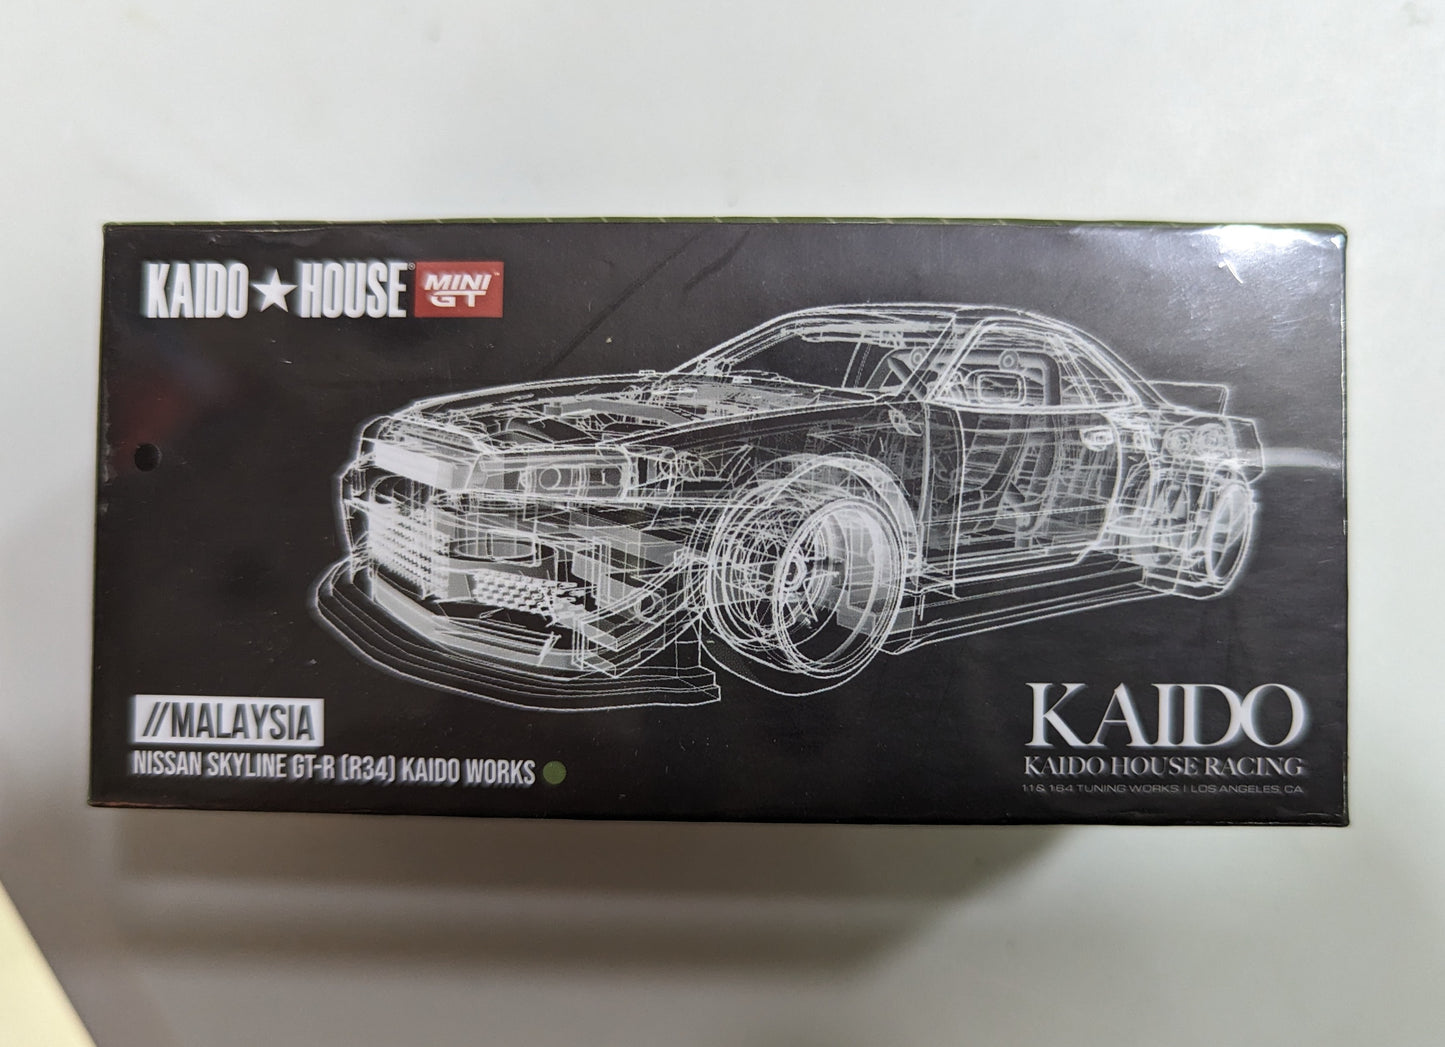 Mini GT x Kaido House MDX23 exclusive 1:64 Nissan Skyline GT-R R34